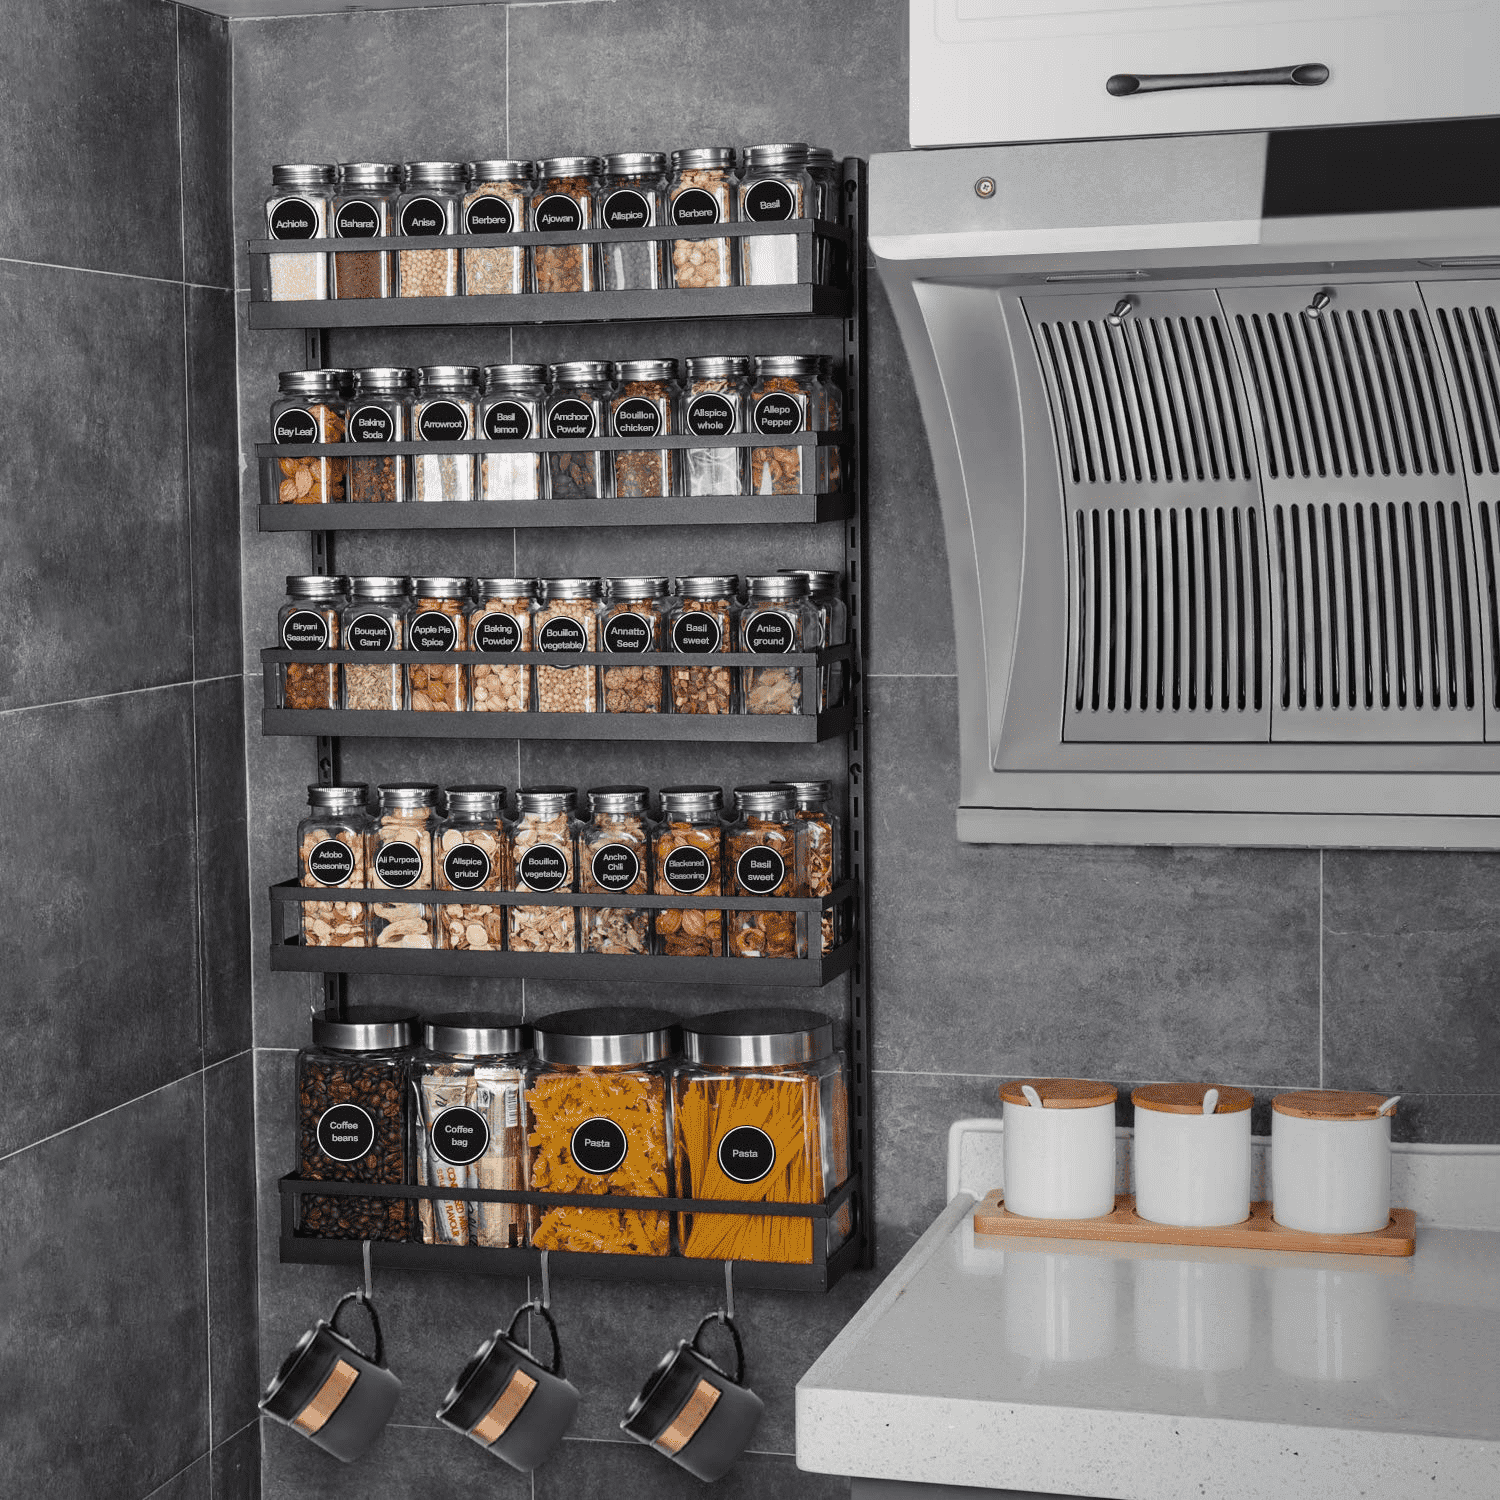  Mystozer Spice Rack Organizer Wall Mount, Hanging Spice Pantry  Storage Shelf Organization, Set of 6 Space Saver Seasoning Racks for  Kitchen Cabinet, Door or Pantry, Black : Home & Kitchen